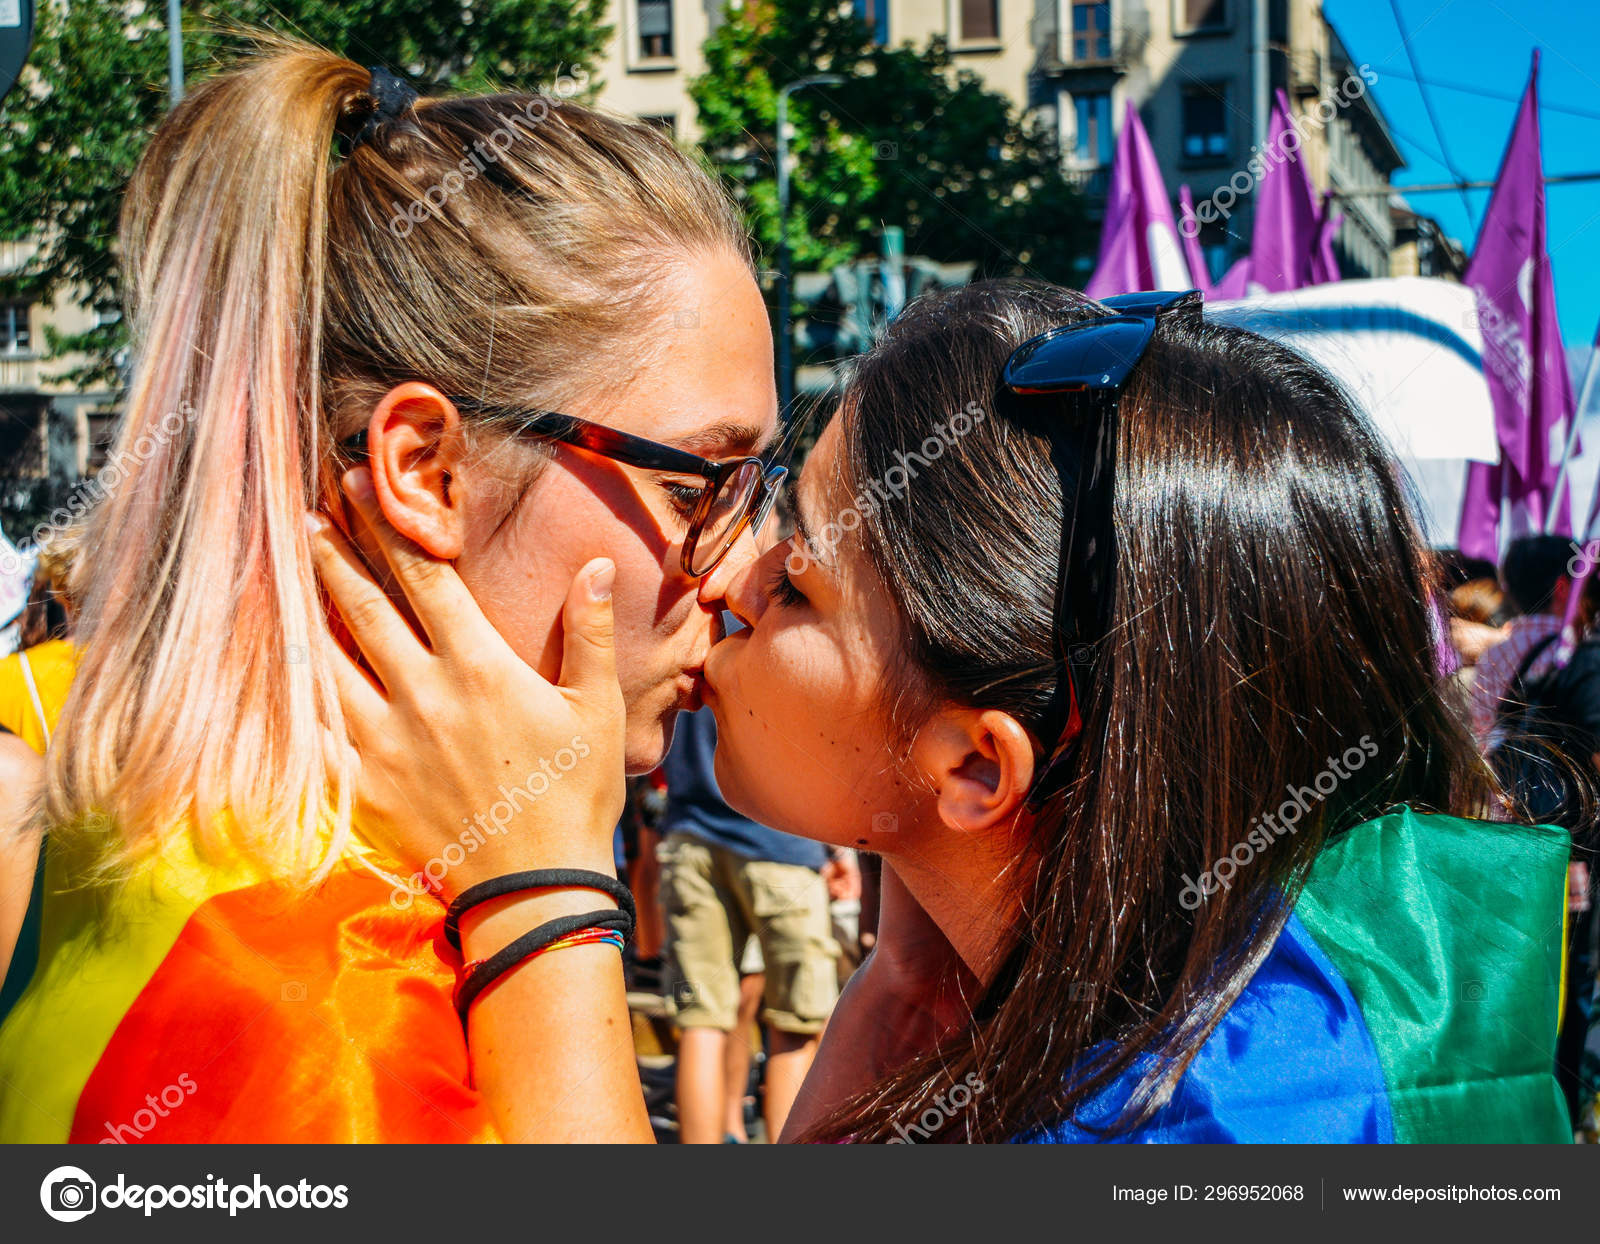 Women Kissing Women Pics